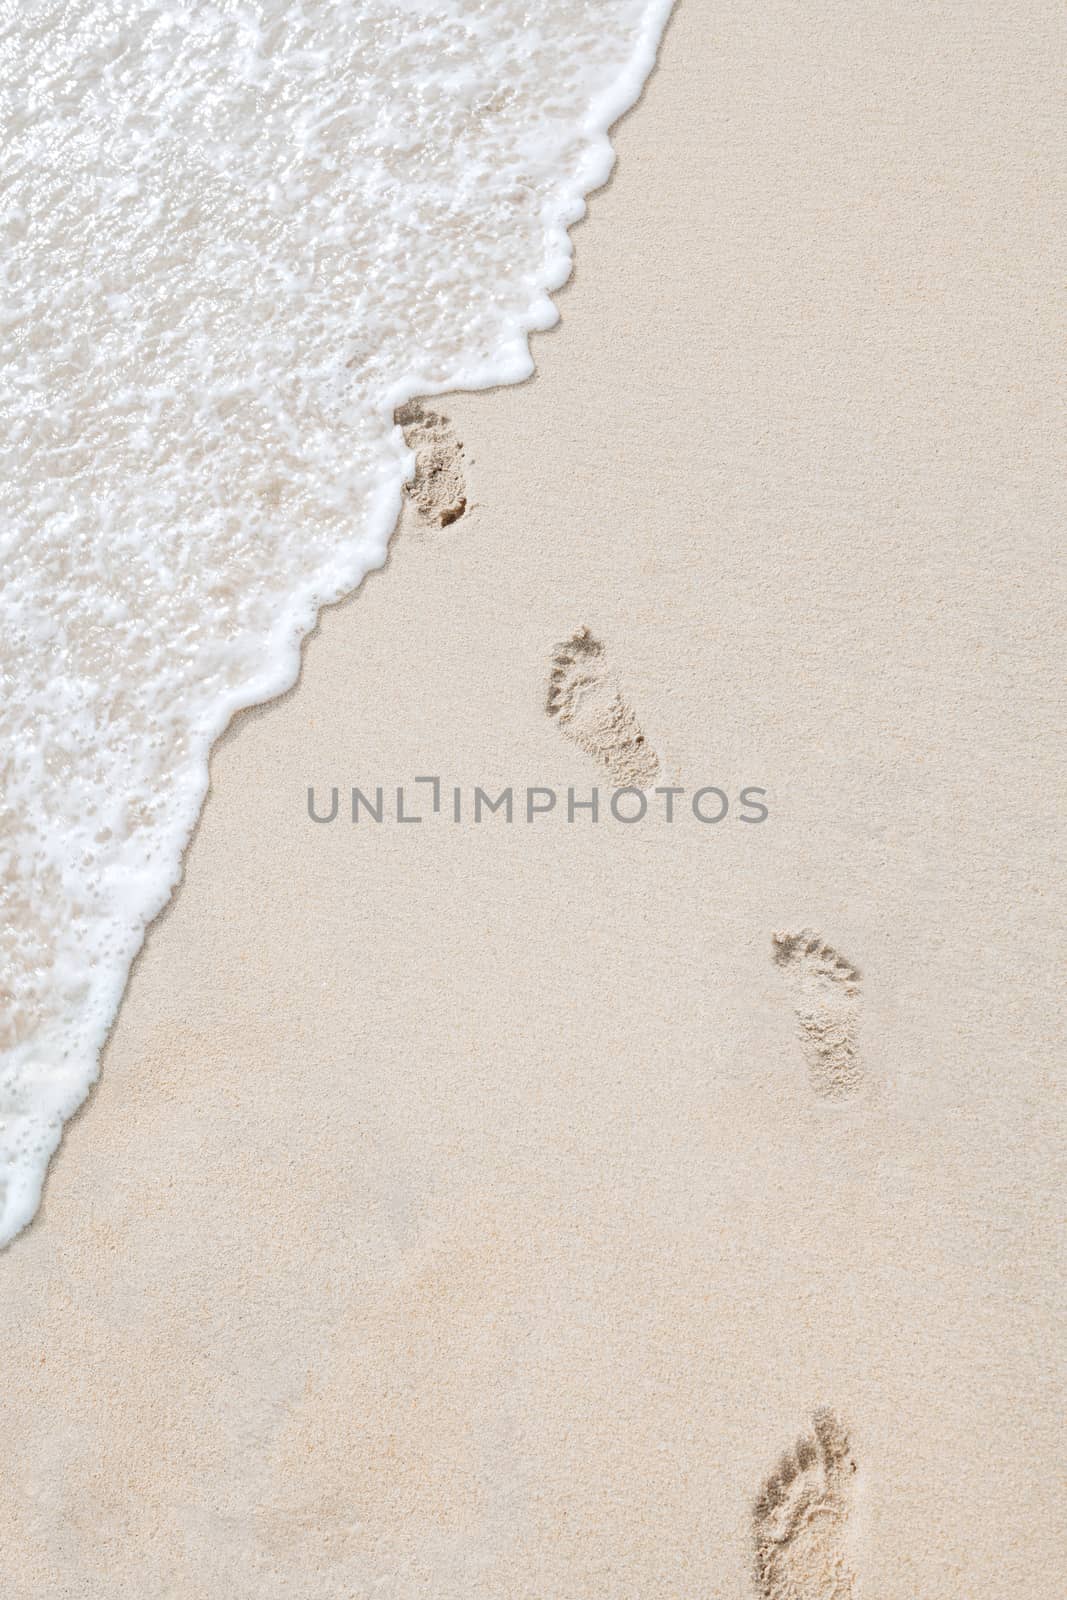 view of human steps on summer sandy beach